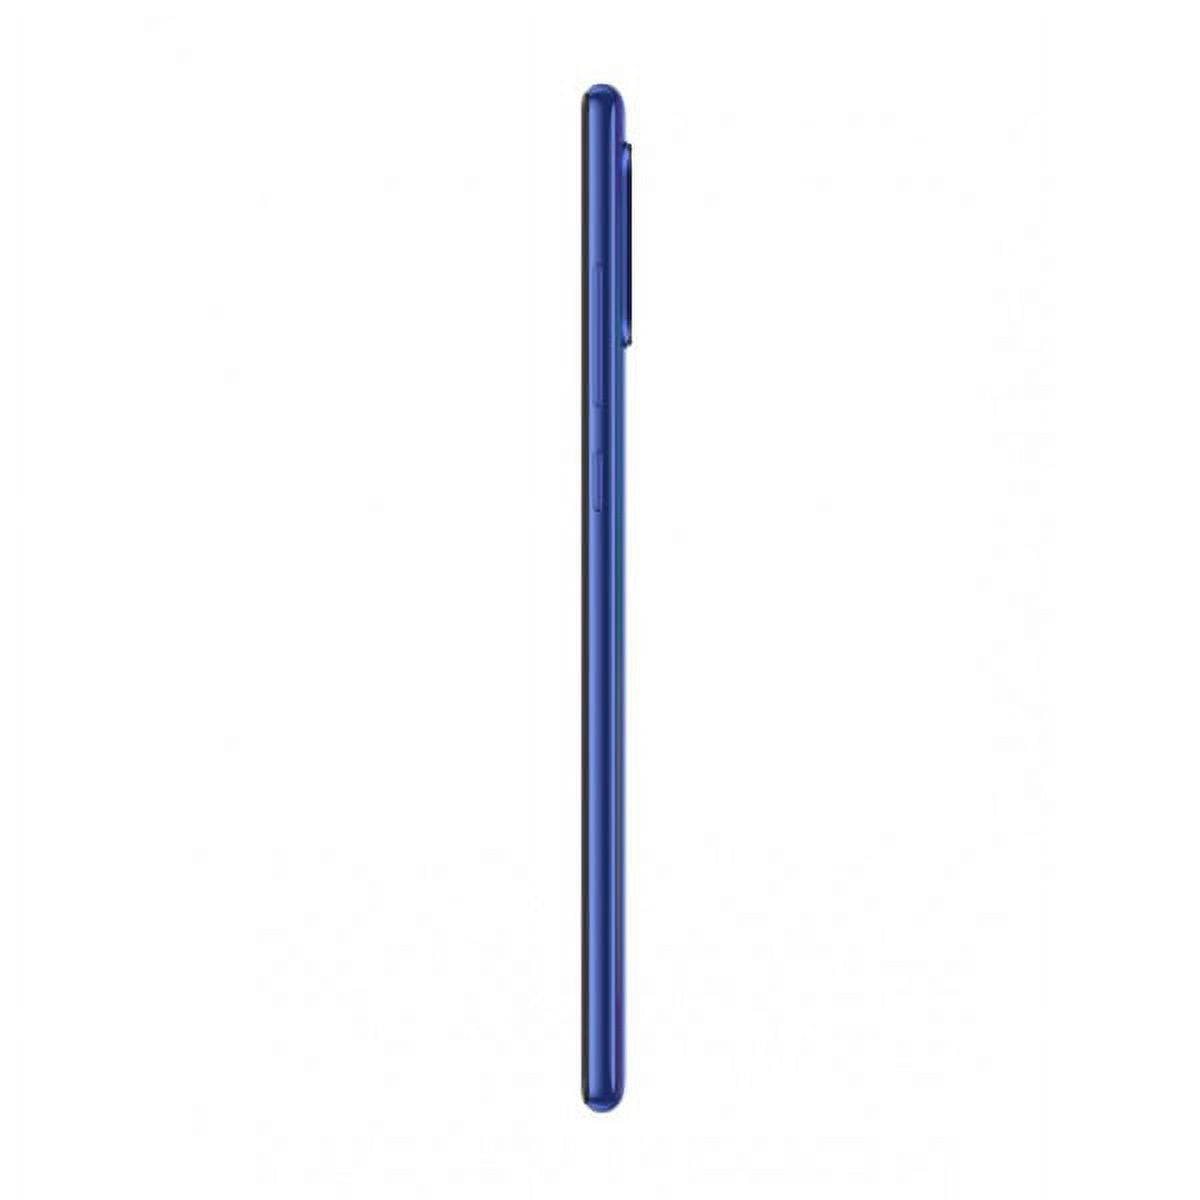 Xiaomi Mi 9 Dual-SIM 64GB Smartphone MI-9-64GB-BLUE B&H Photo